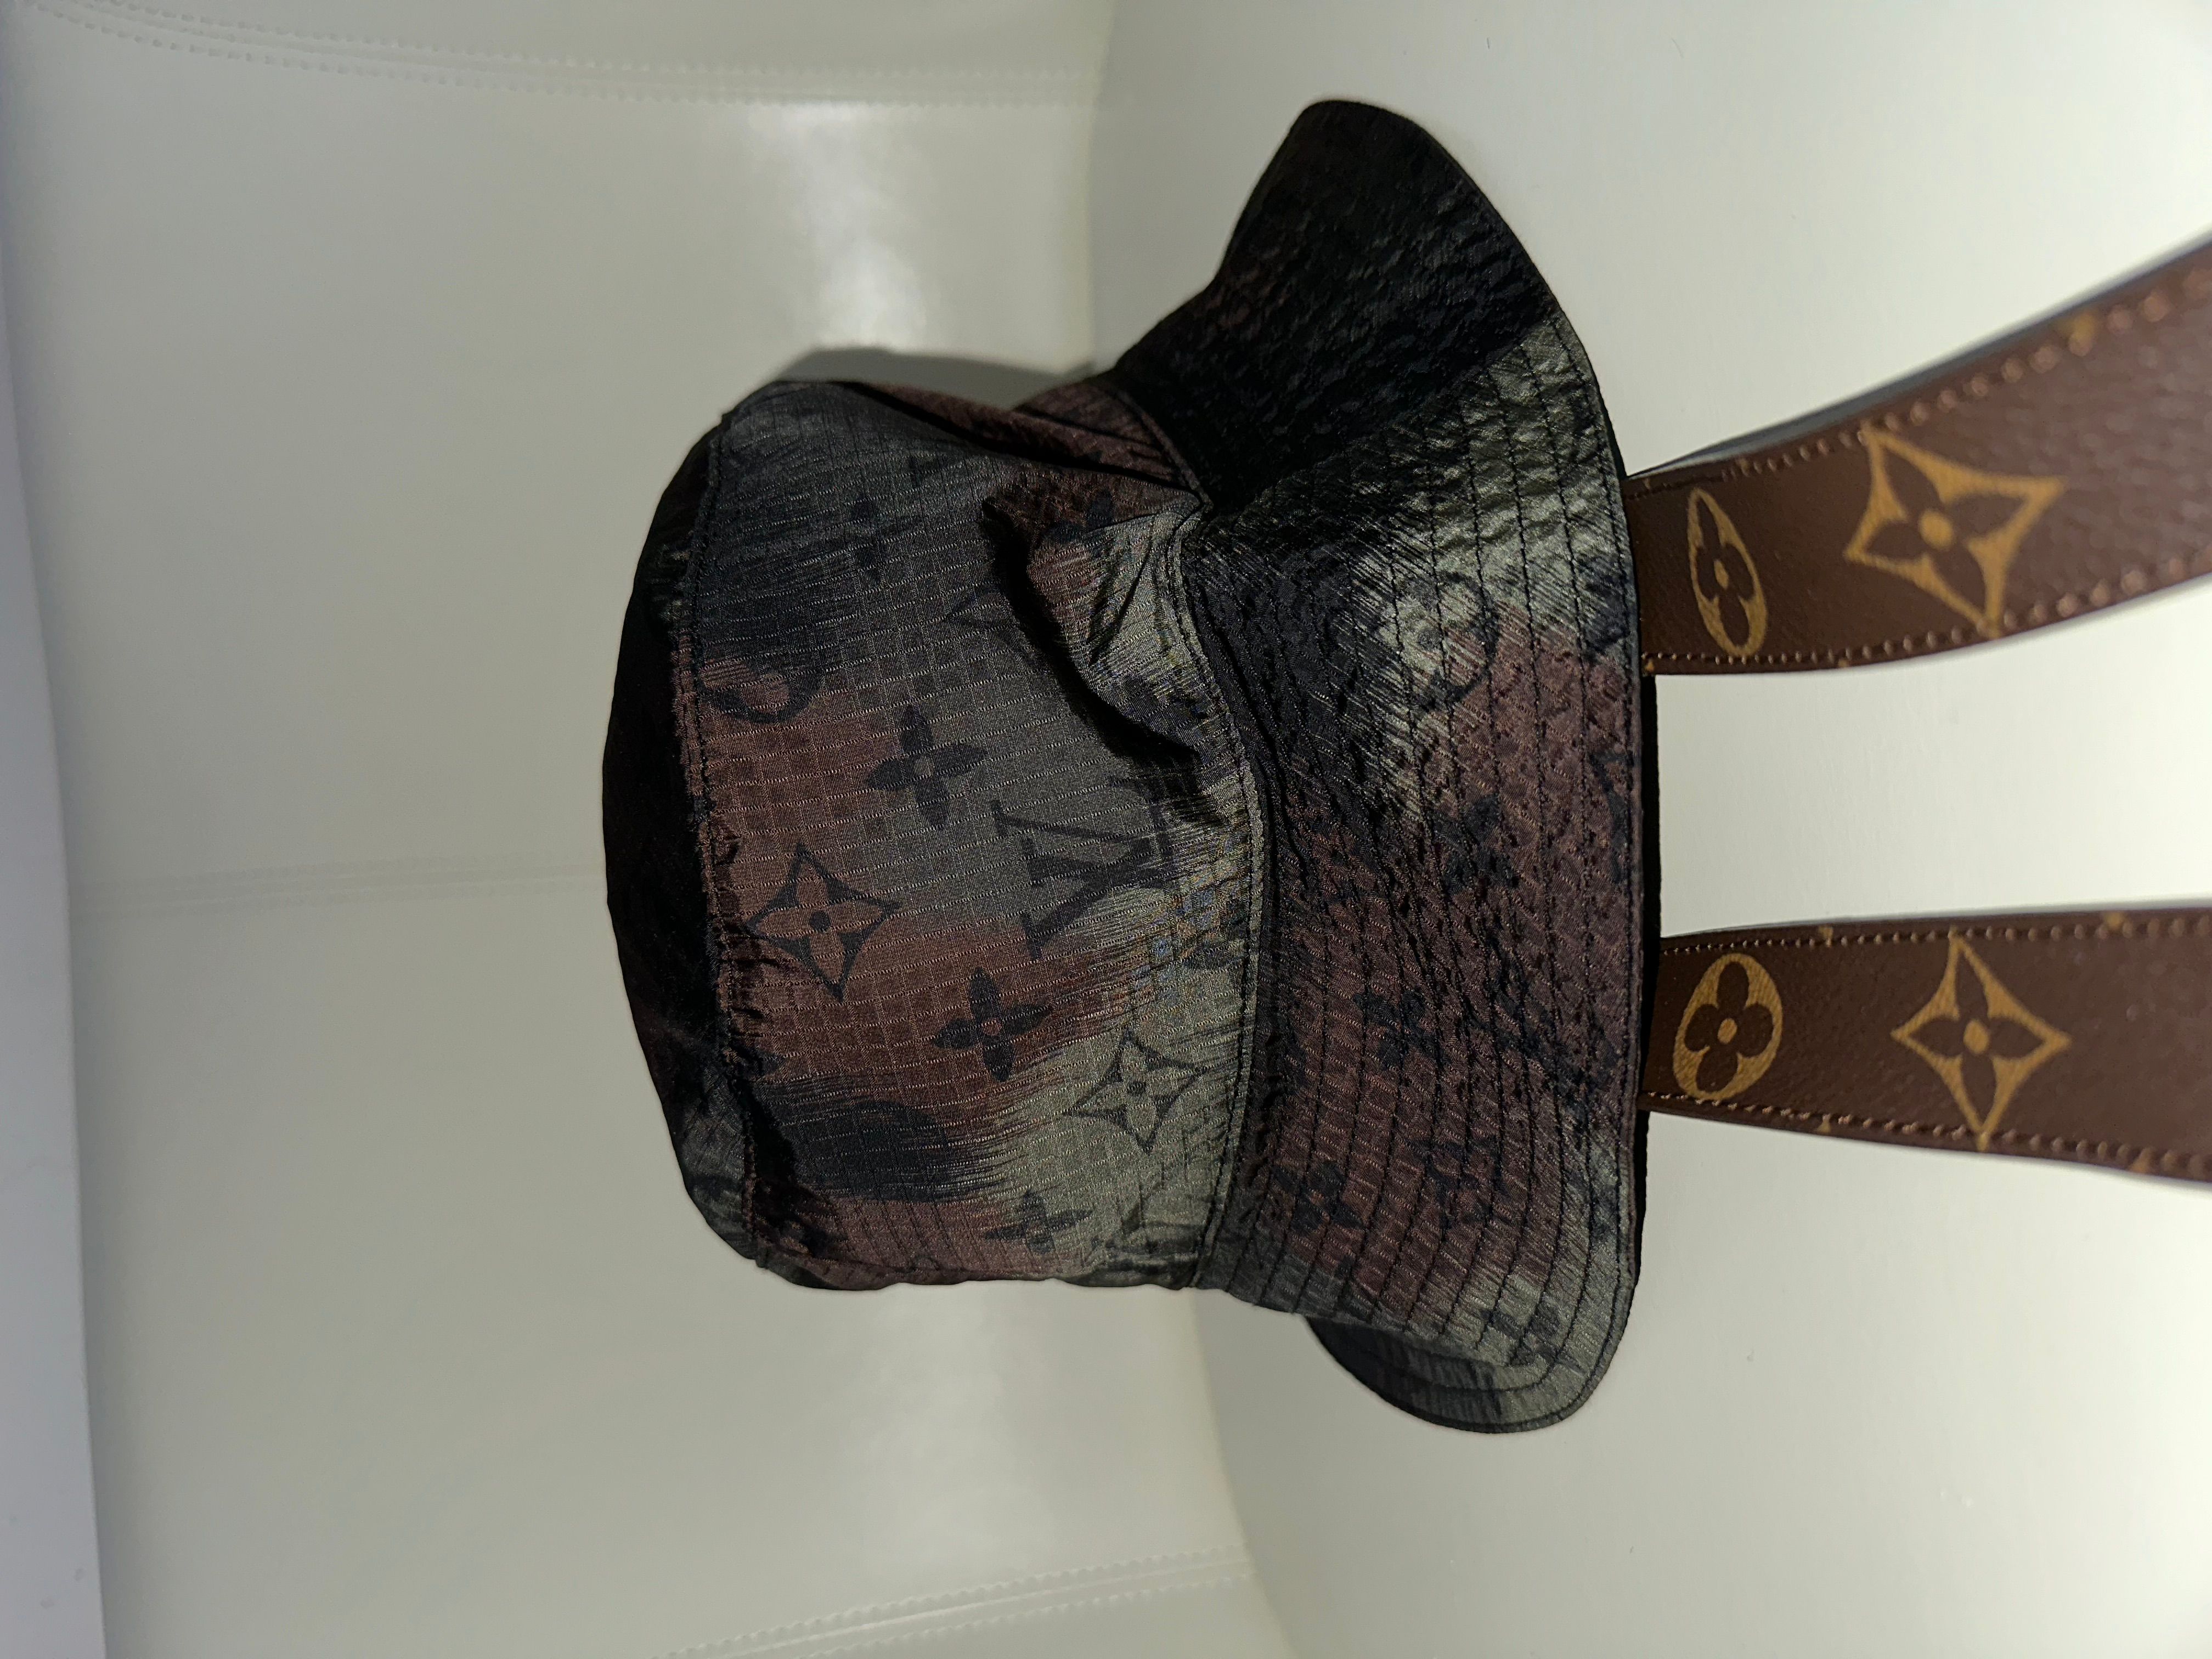 Louis Vuitton IKAT MONOGRAM CAMOUFLAGE Bucket Hat with Signature Straps. 58